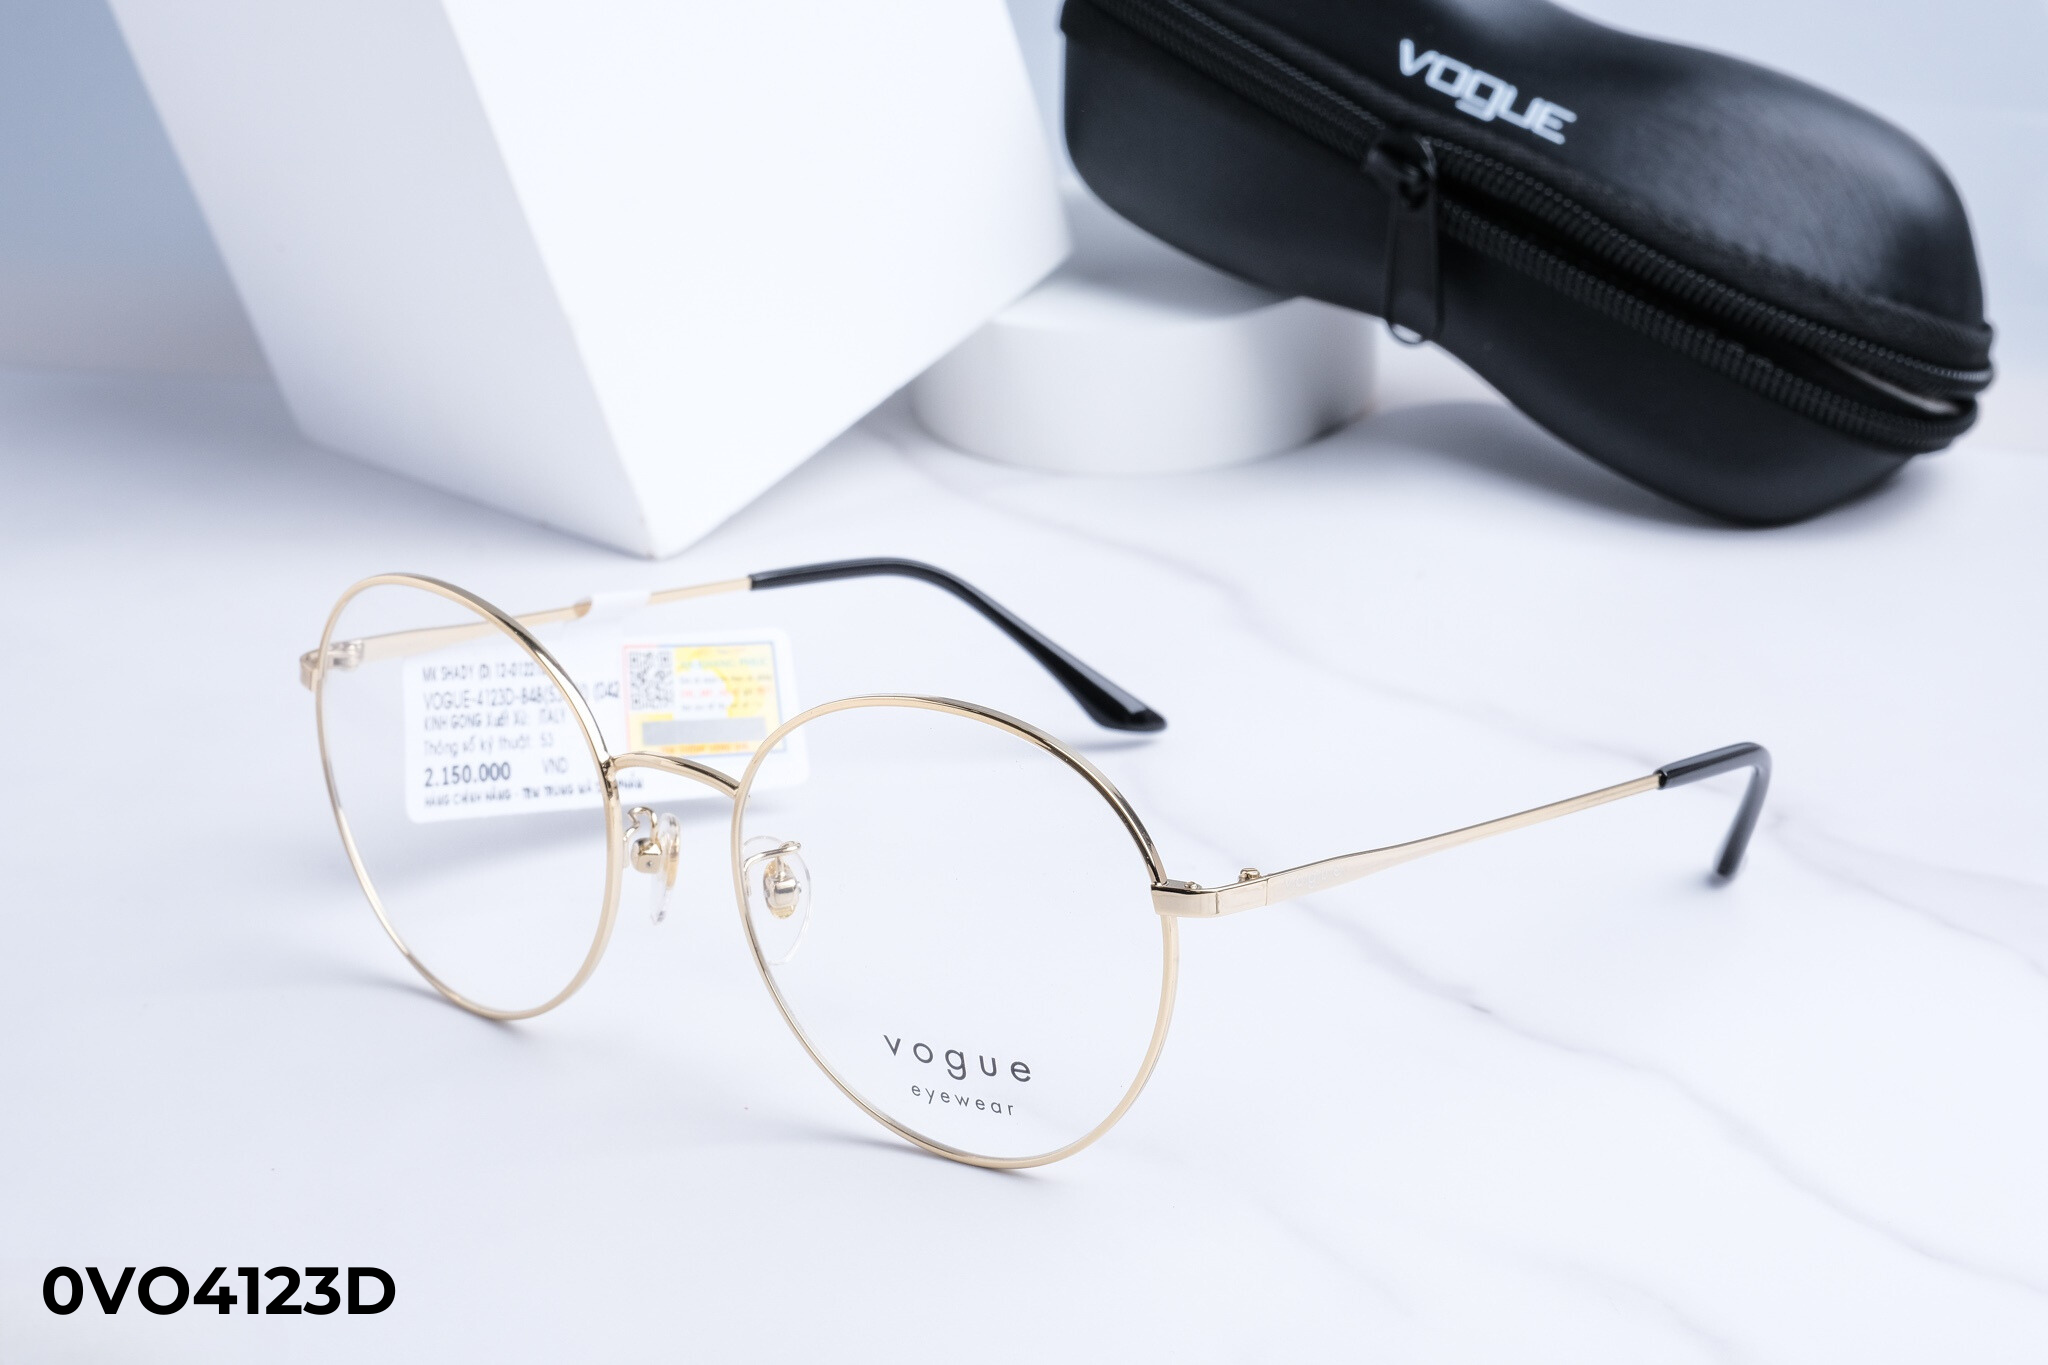  Vogue Eyewear - Glasses - 0VO4123D 